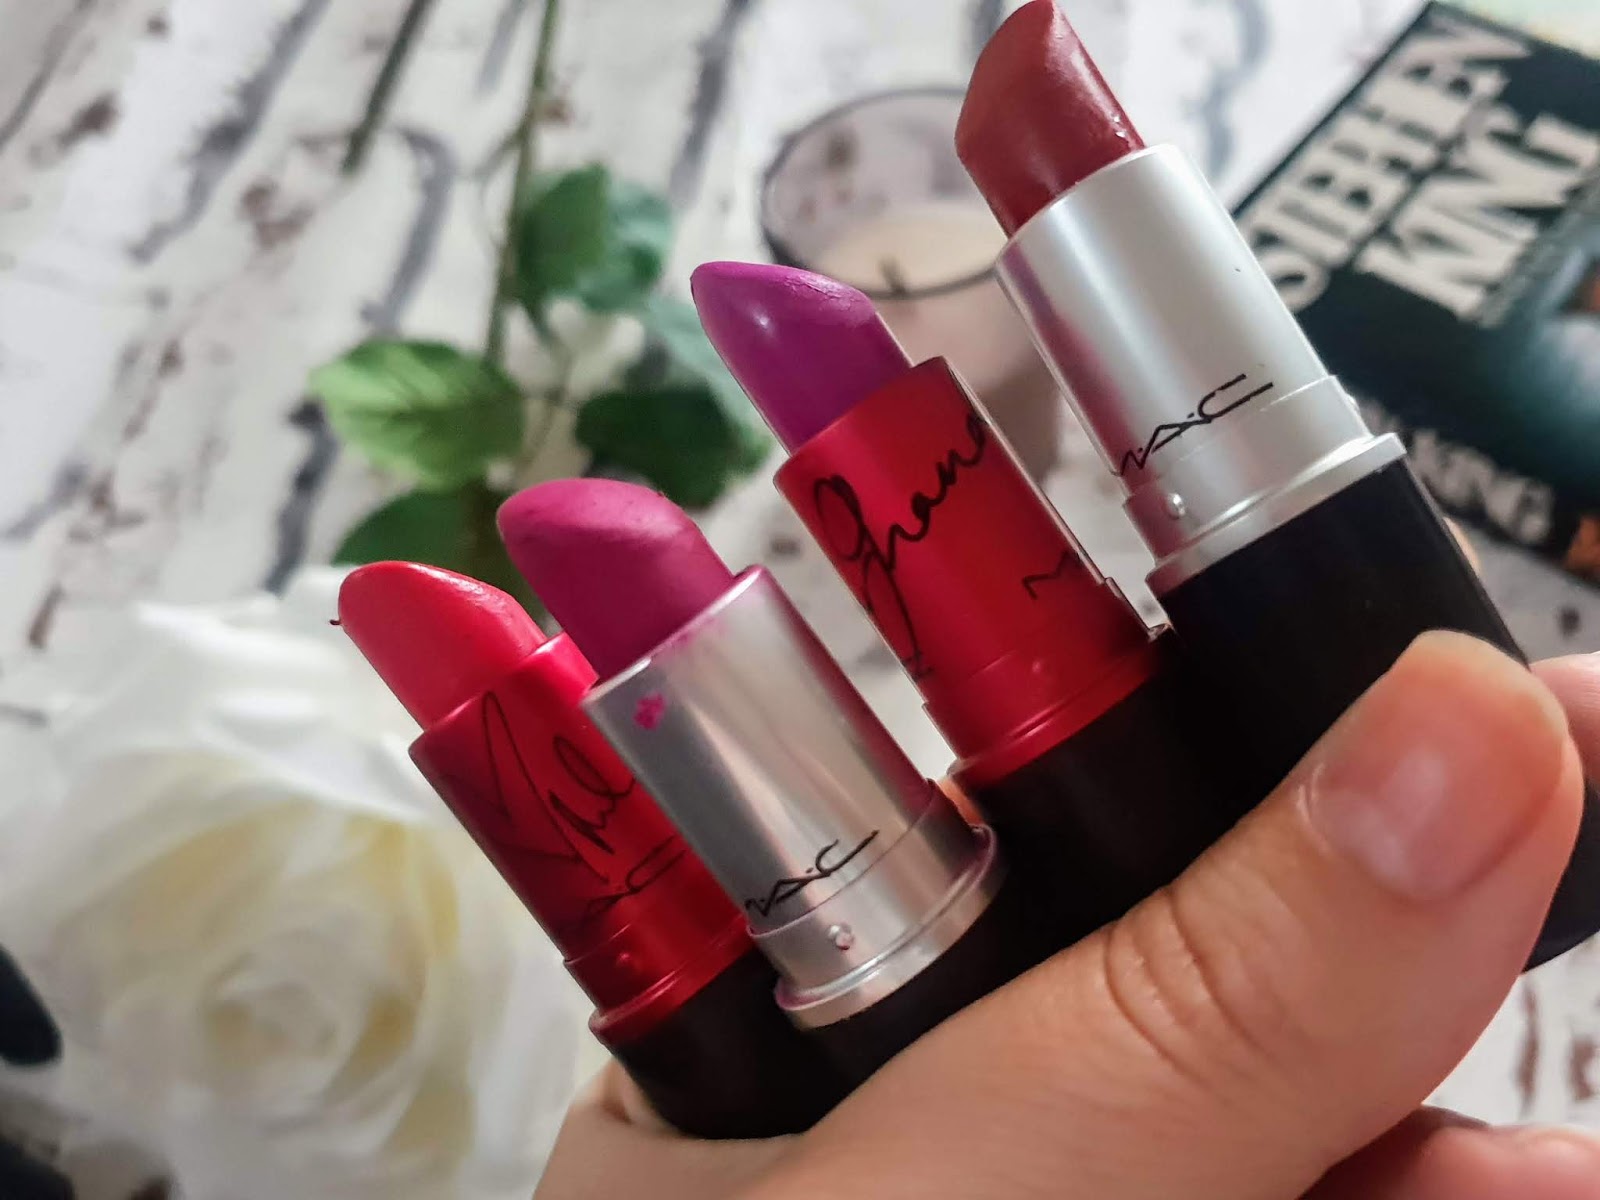 My MAC Lipstick collection